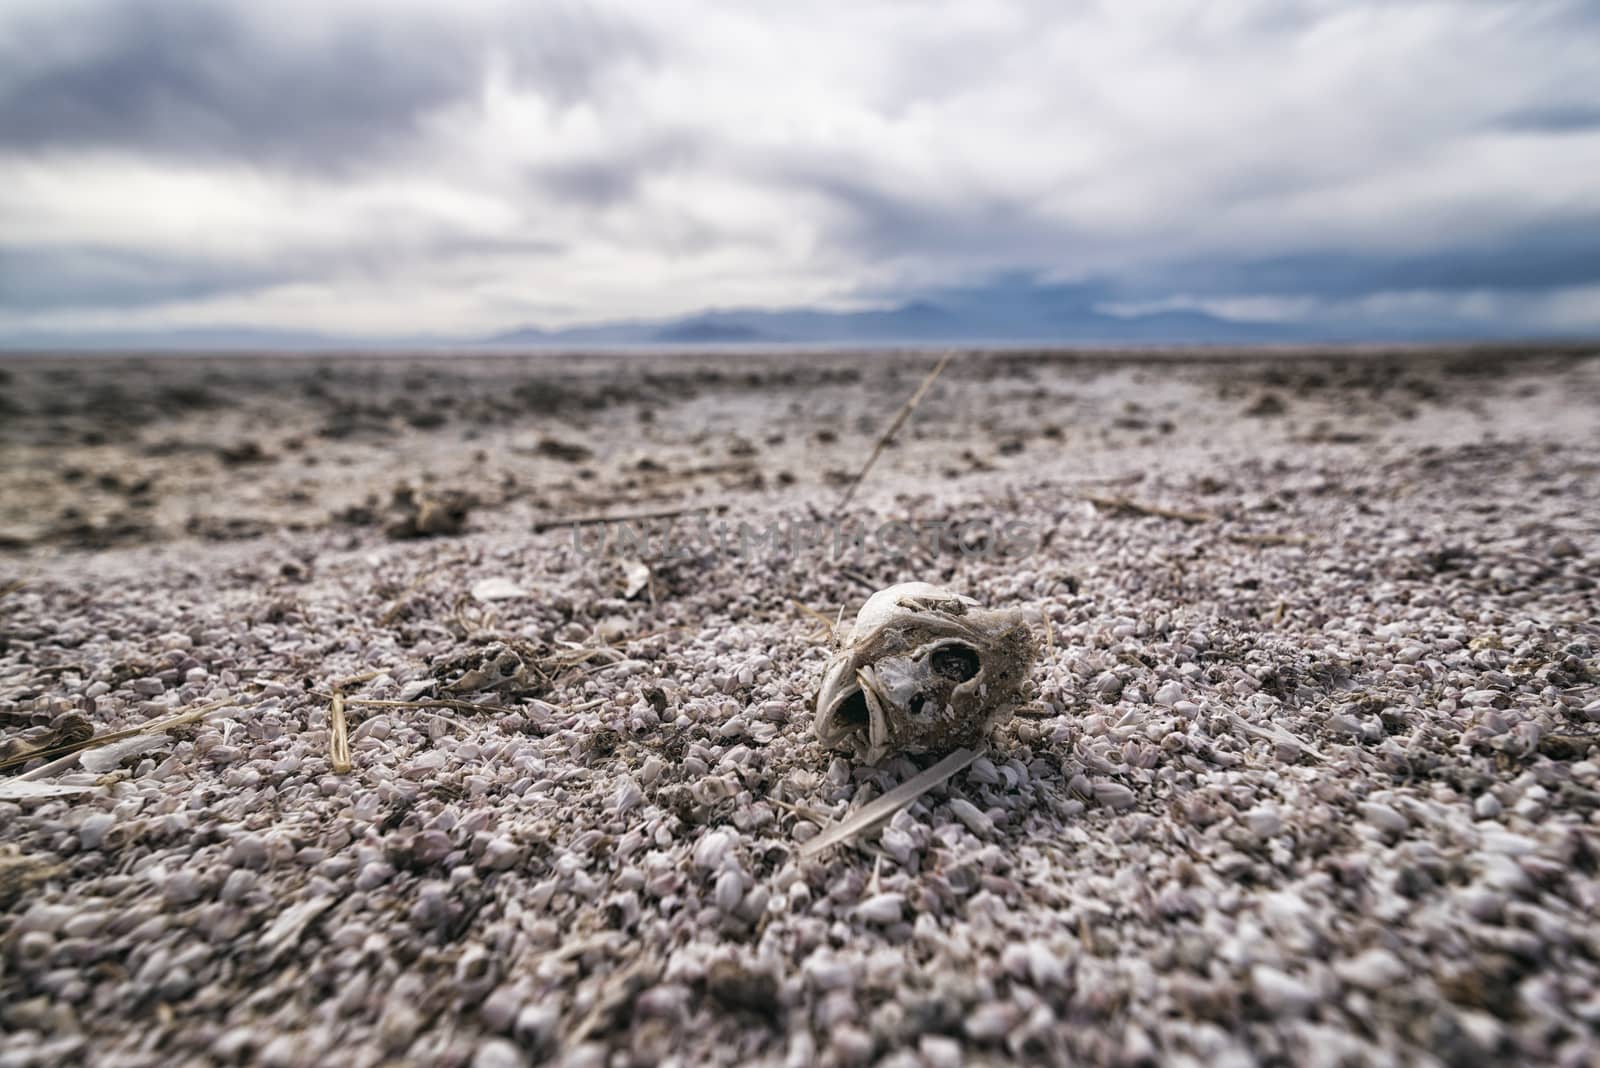 Fish Bones at the Shore of Salton Sea, California